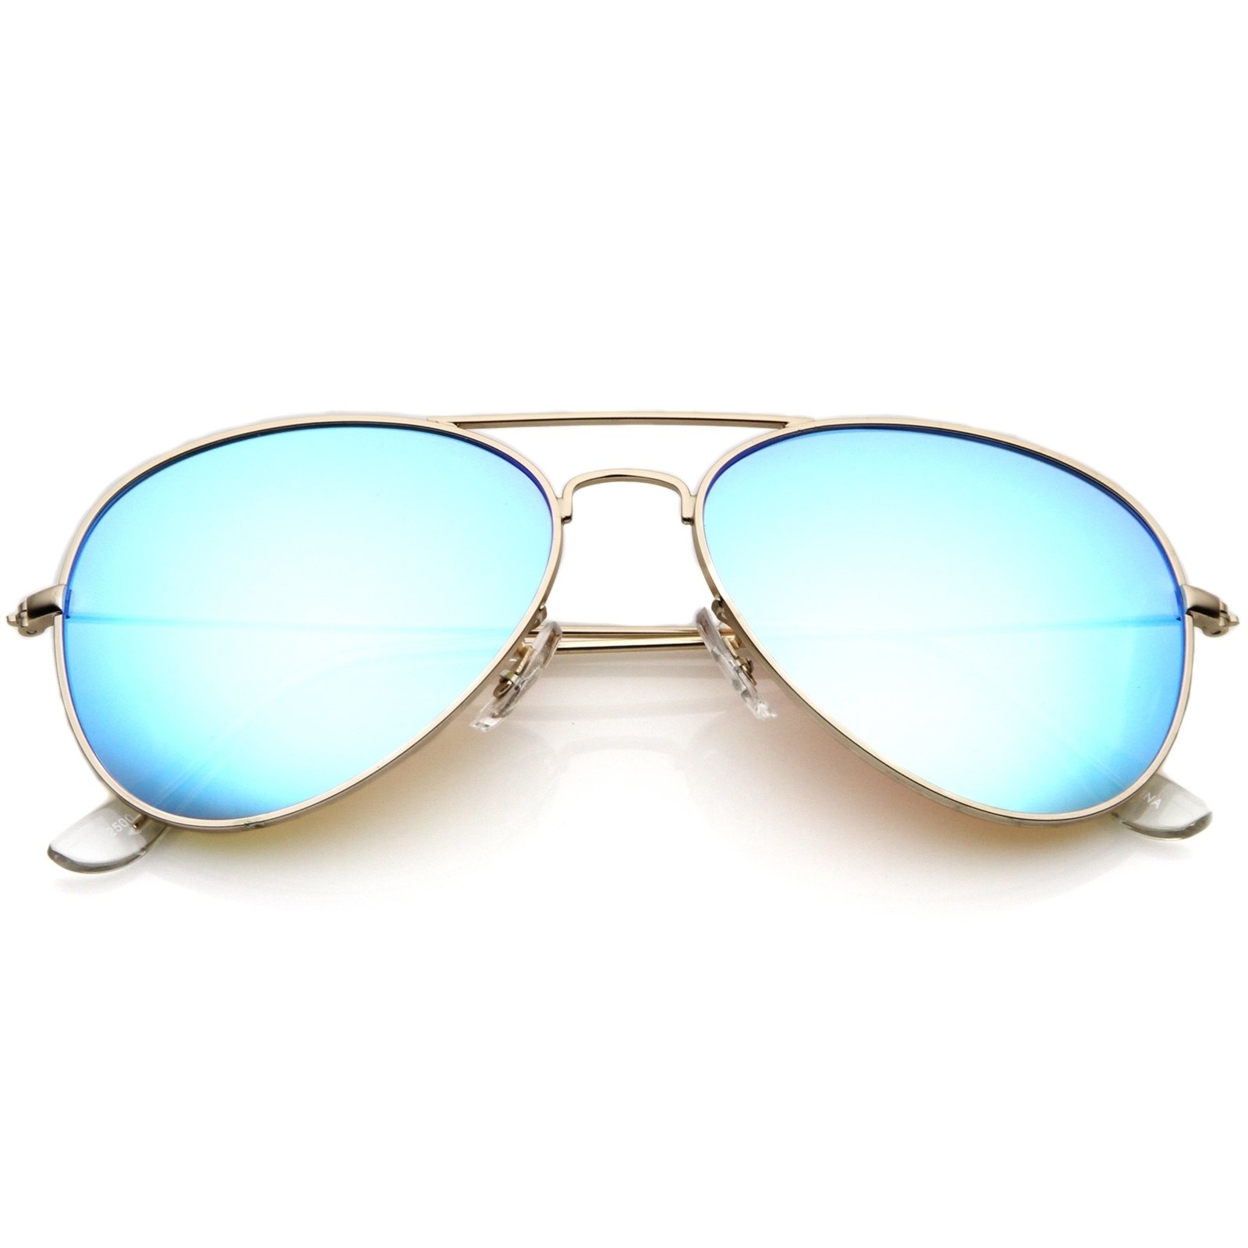 Premium Nickel Plated Frame Multi-Coated Mirror Lens Aviator Sunglasses 59mm - Gold / Blue Mirror